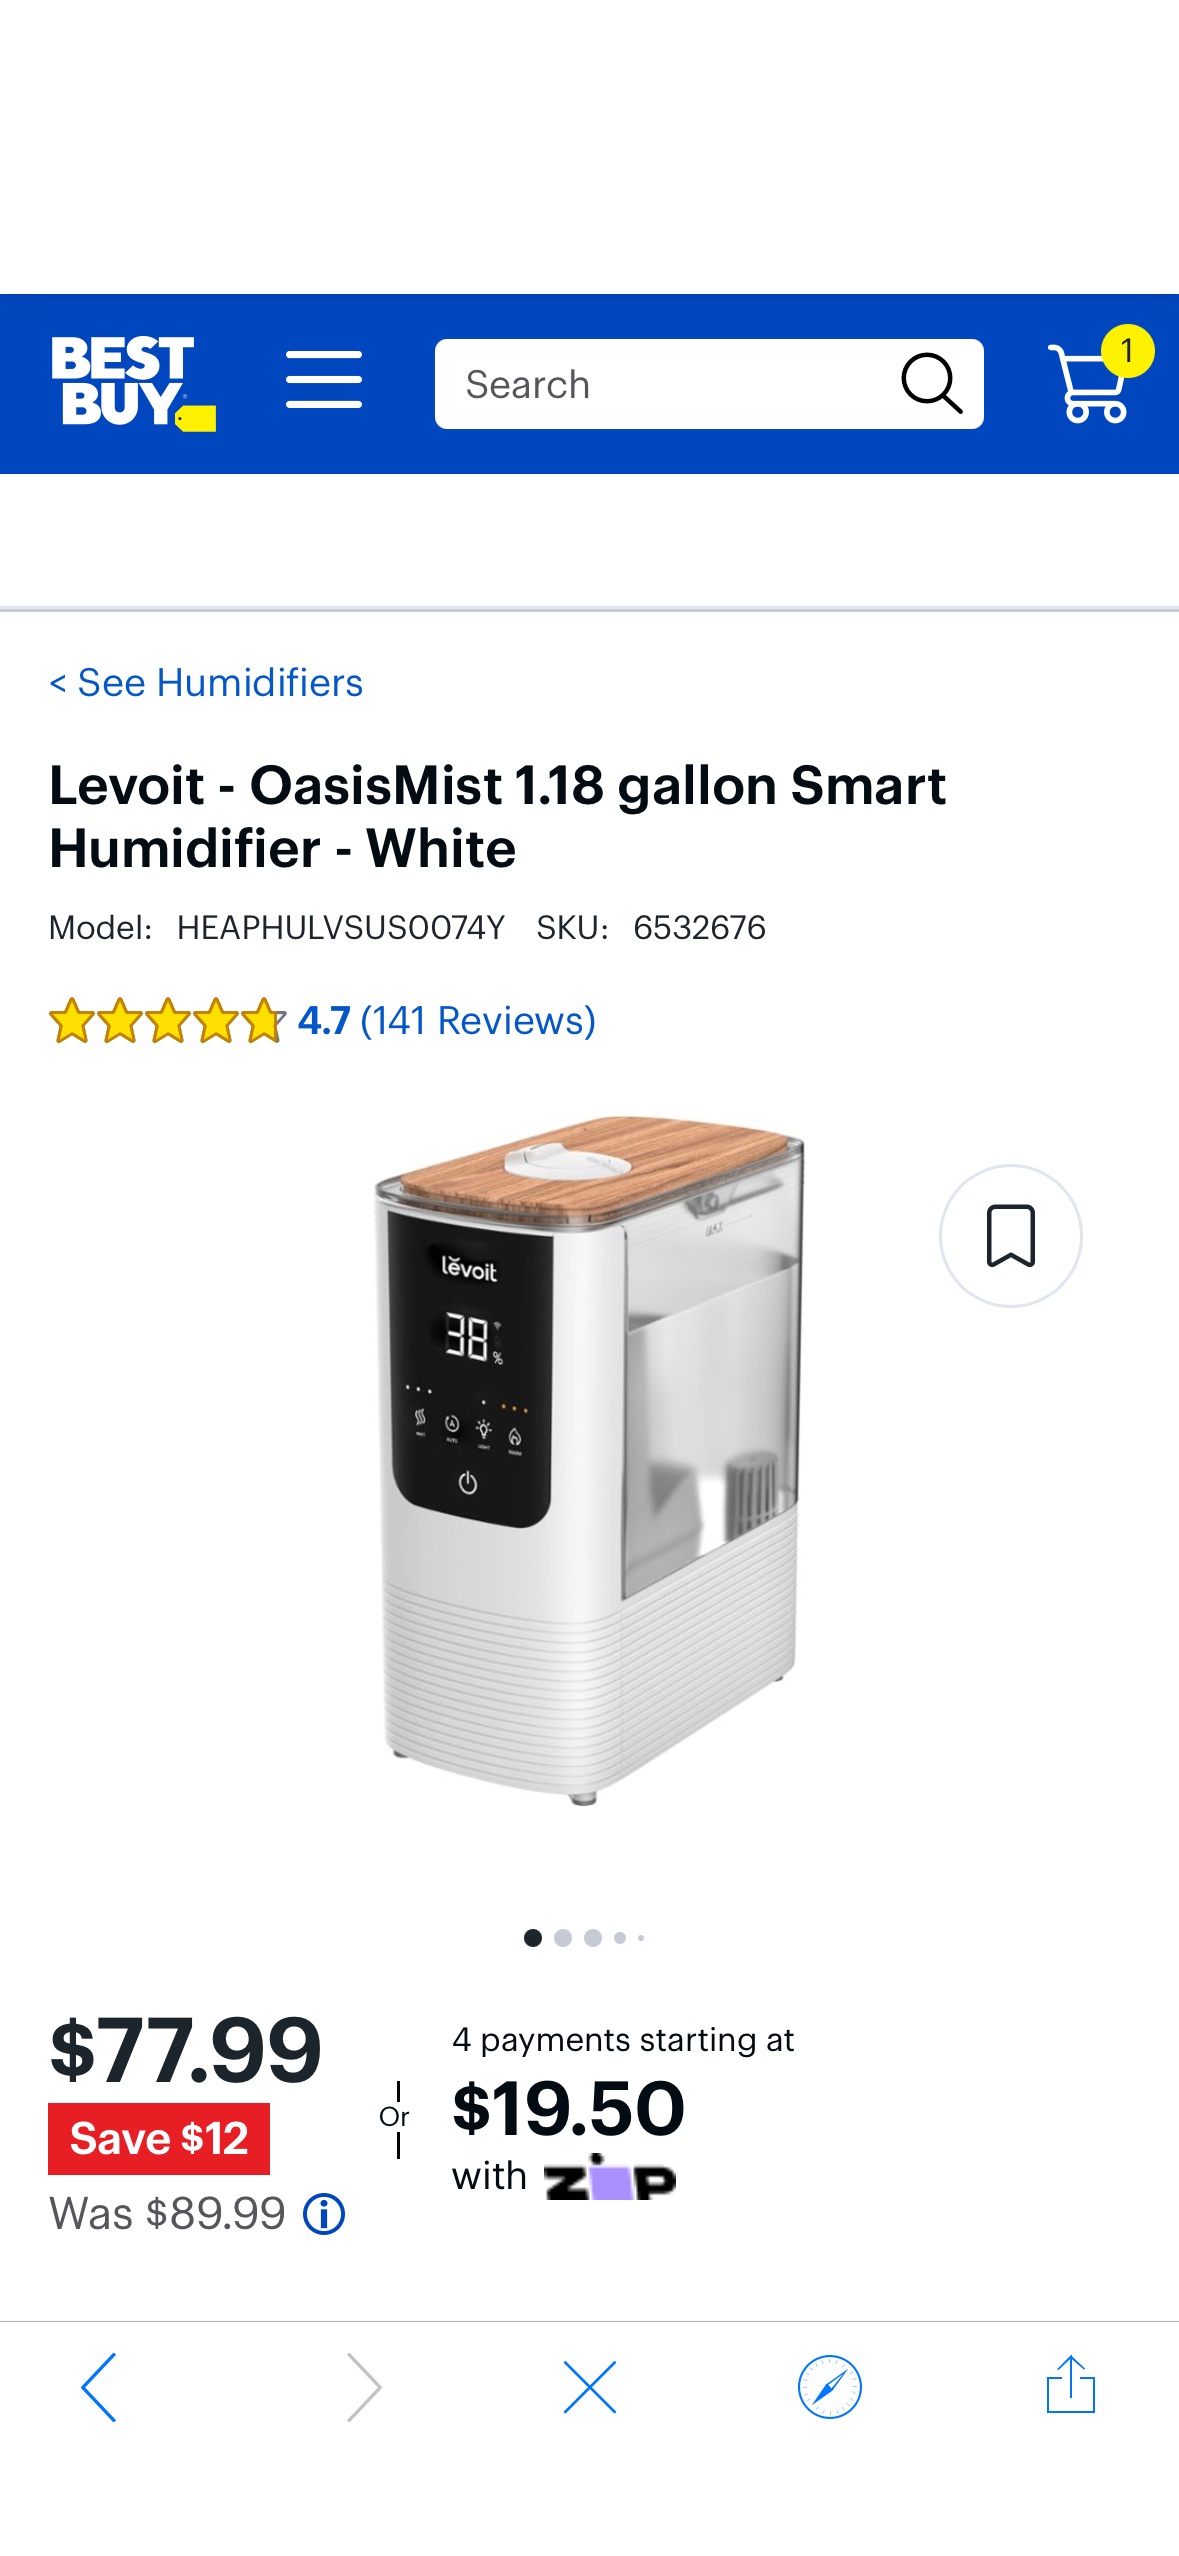 Levoit OasisMist 1.18 gallon Smart Humidifier White HEAPHULVSUS0074Y - Best Buy